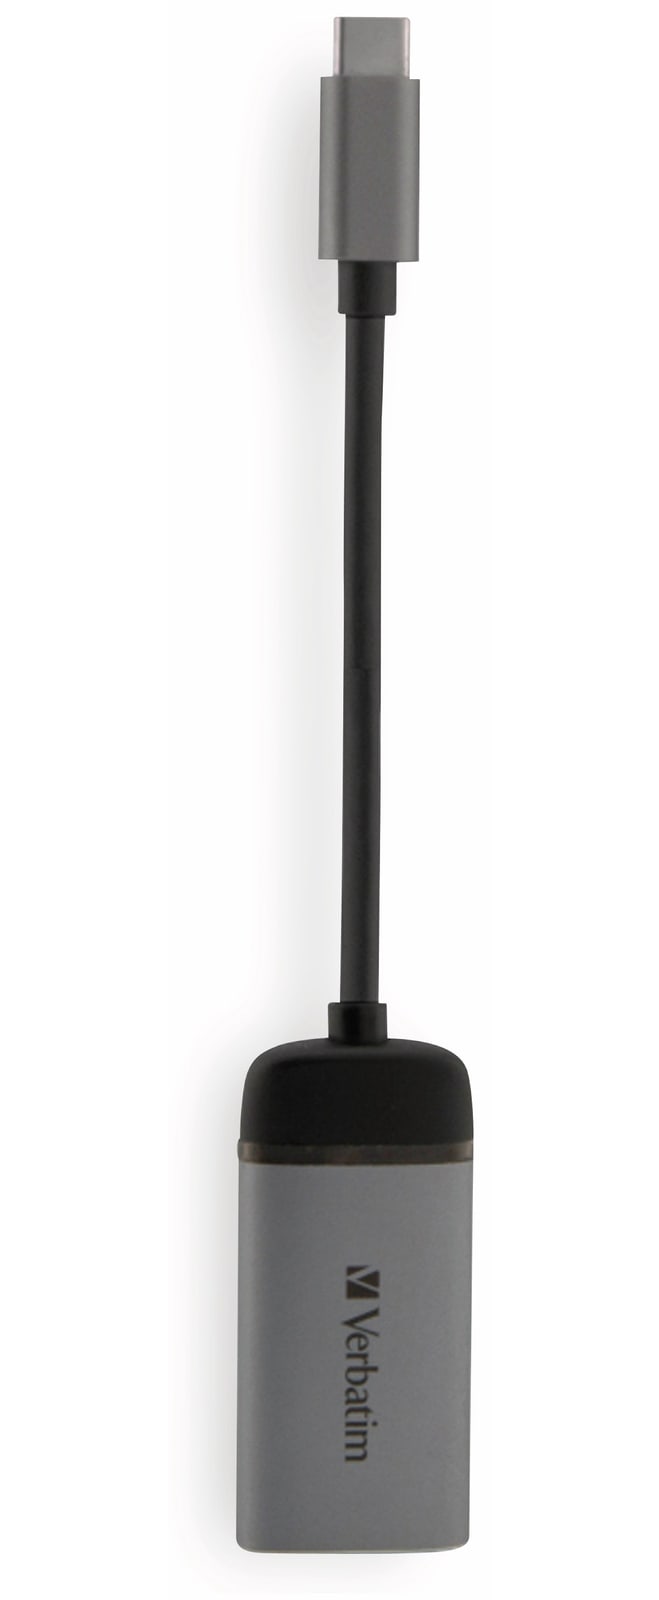 VERBATIM USB-C Adapter 49143, HDMI 4K, Slimline von Verbatim